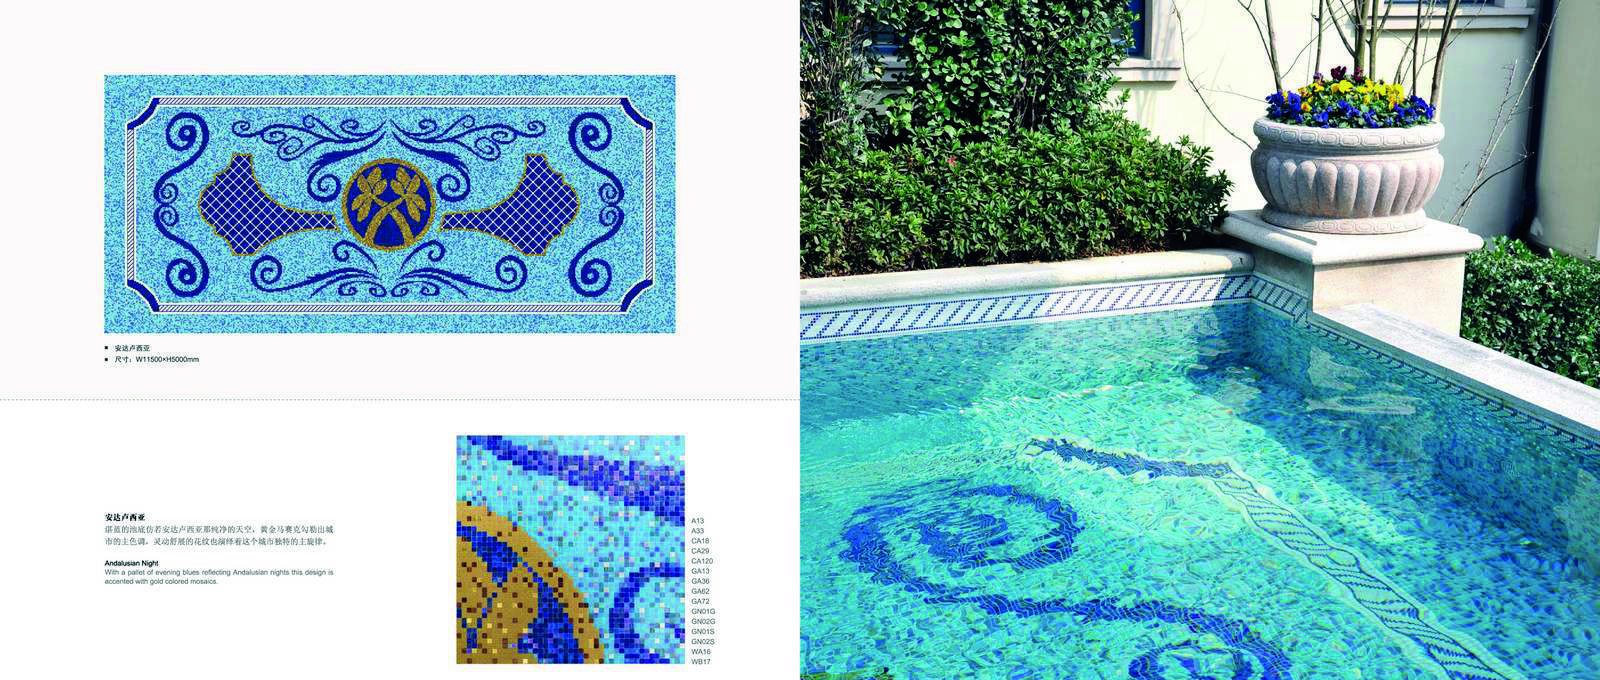 arvex ambientazioni mosaici gres porcellanato02